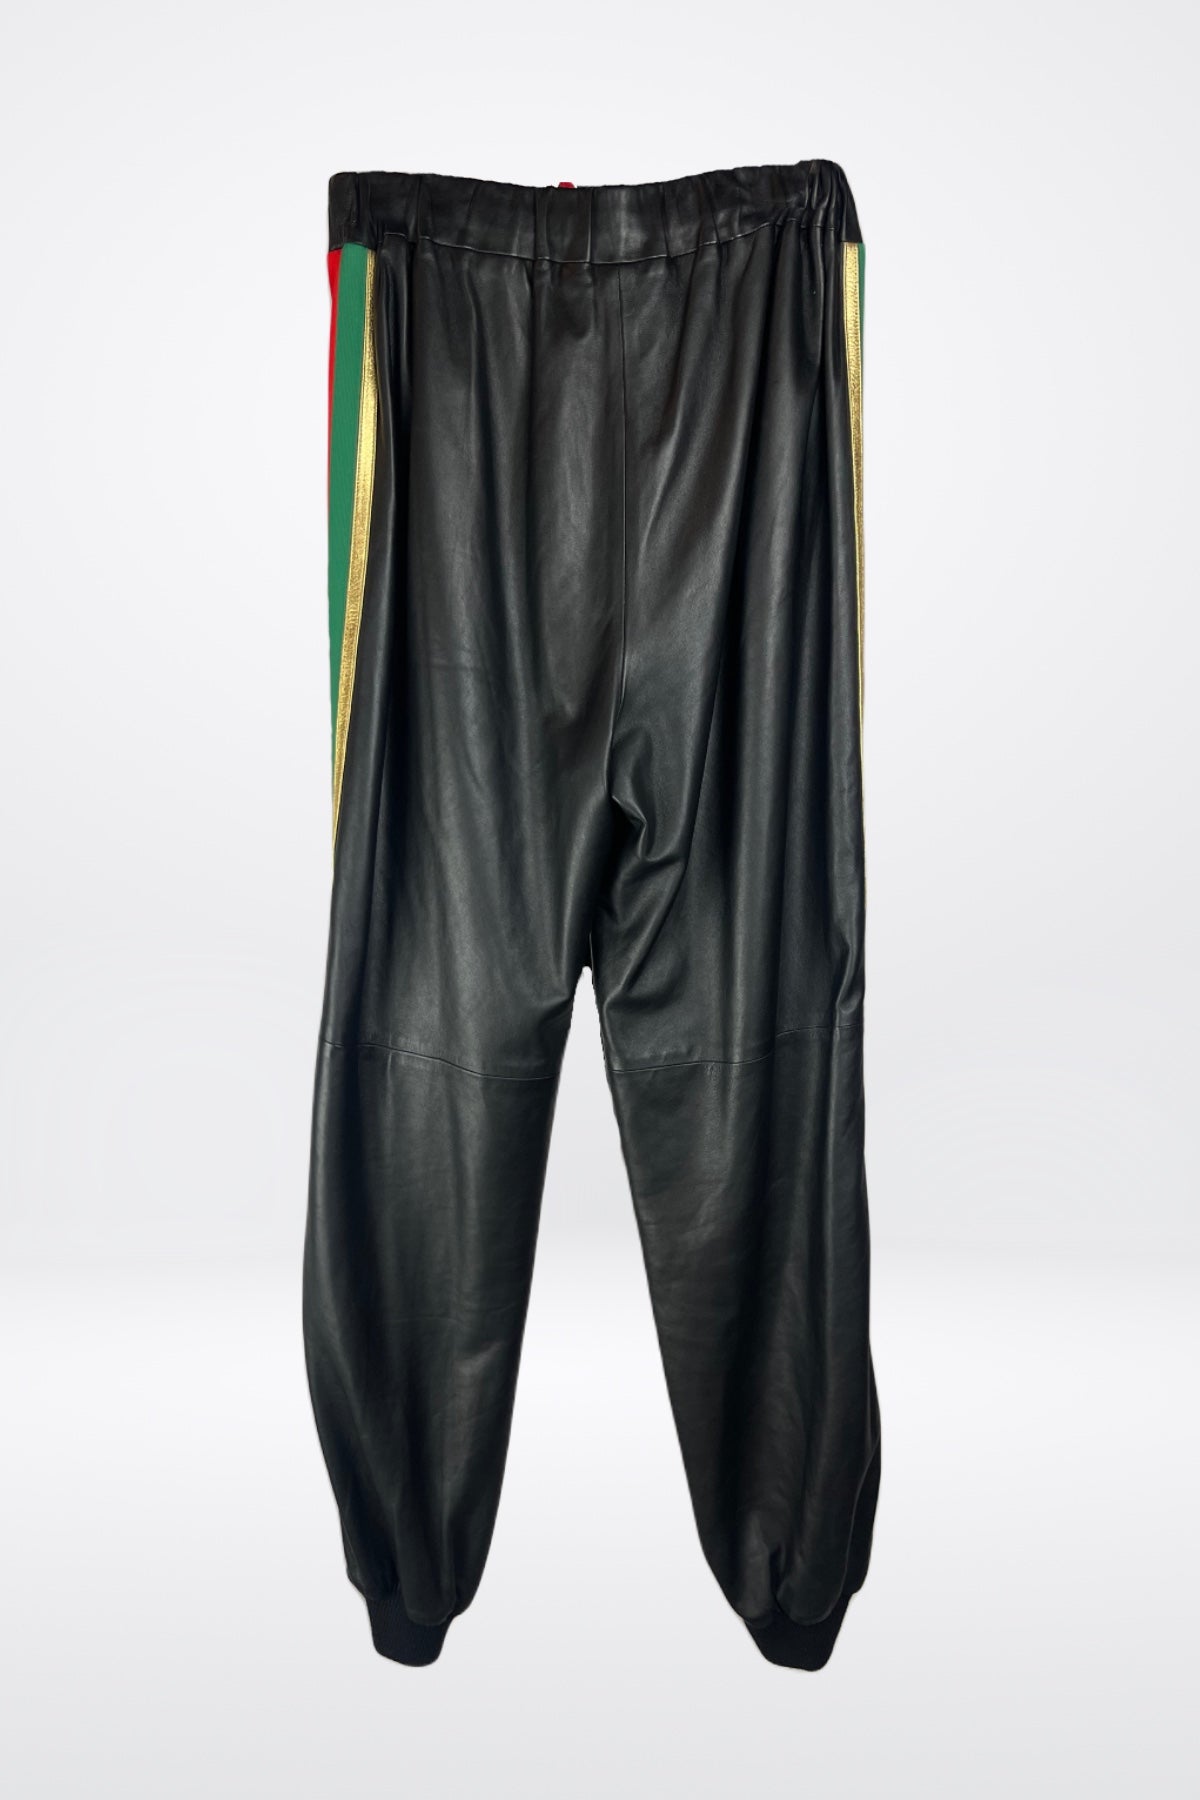 Gucci Black Leather Striped Jogger Pants